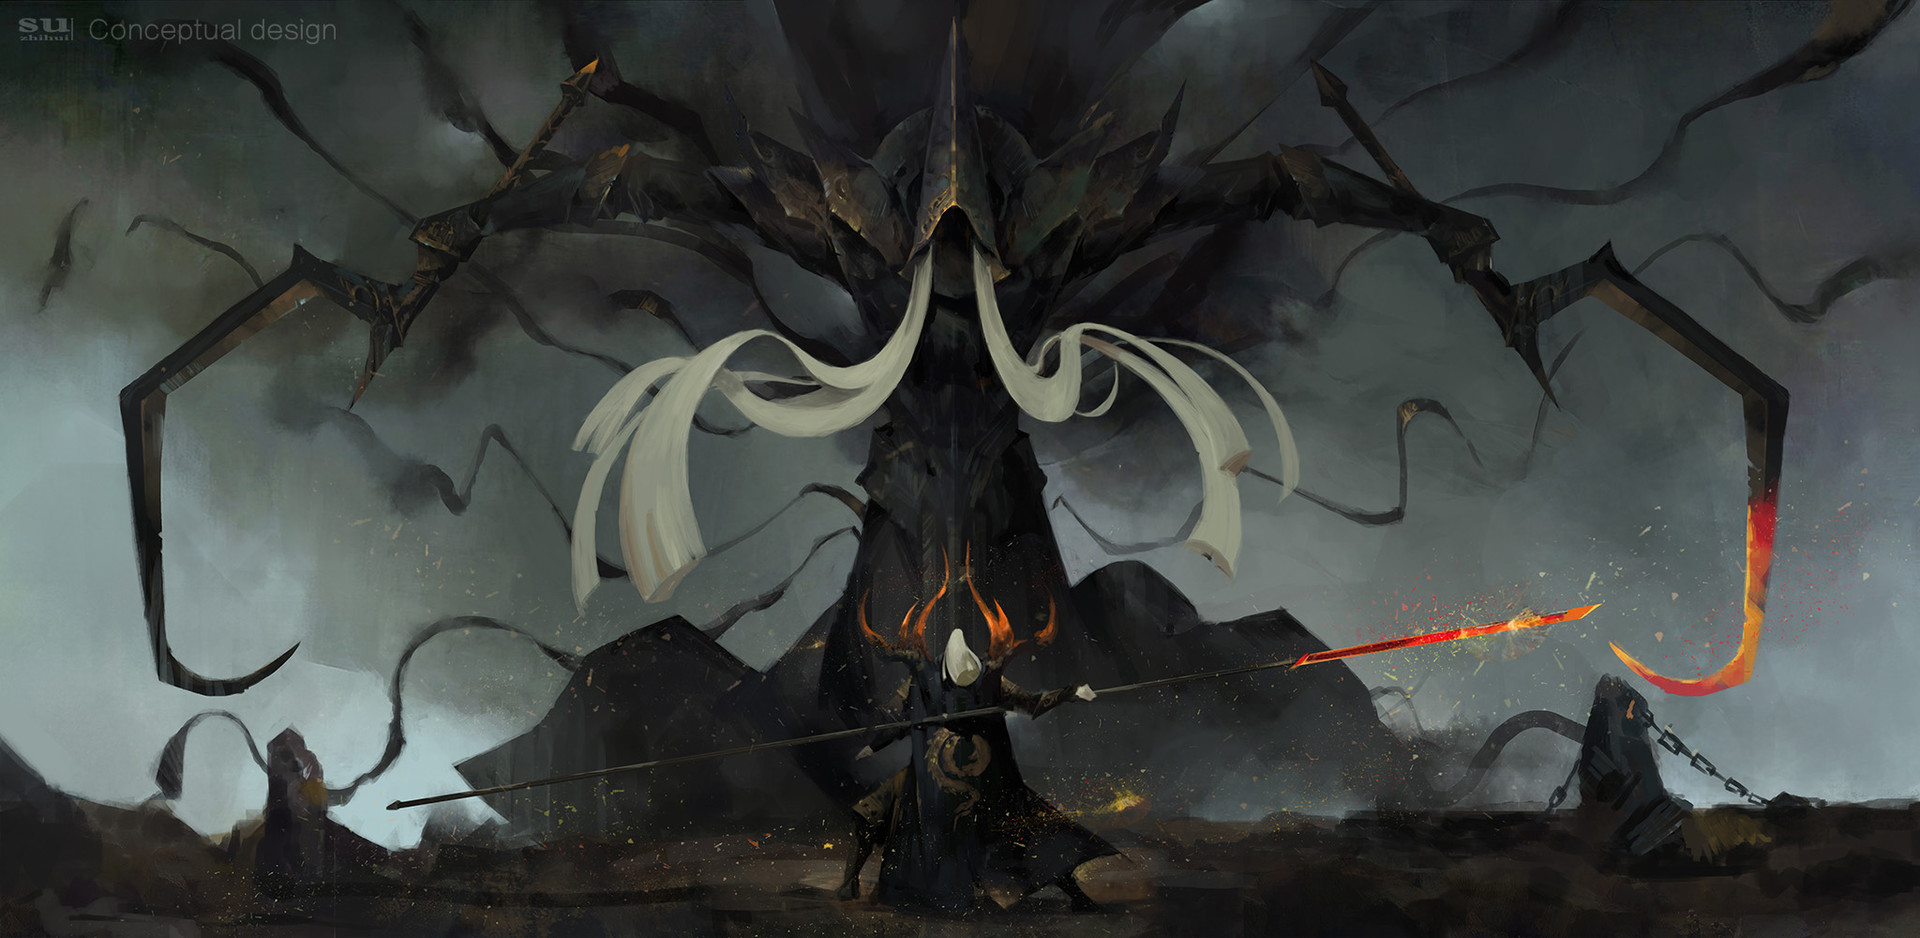 Anime 1920x938 Diablo III Malthael video games PC gaming video game art fantasy art